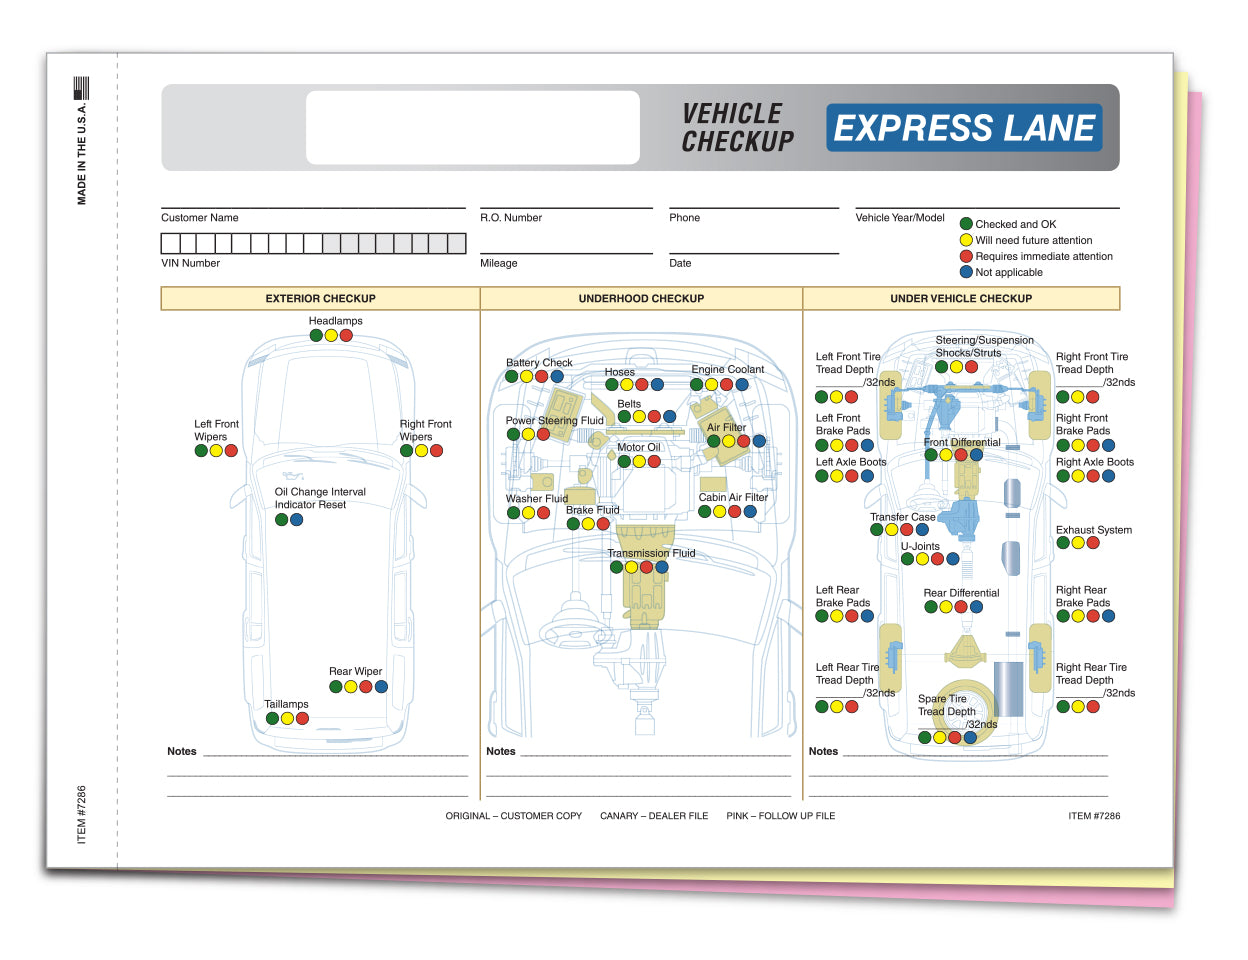 Multi Point Inspection Forms - Generic Express Lane www.flywheelnw.com